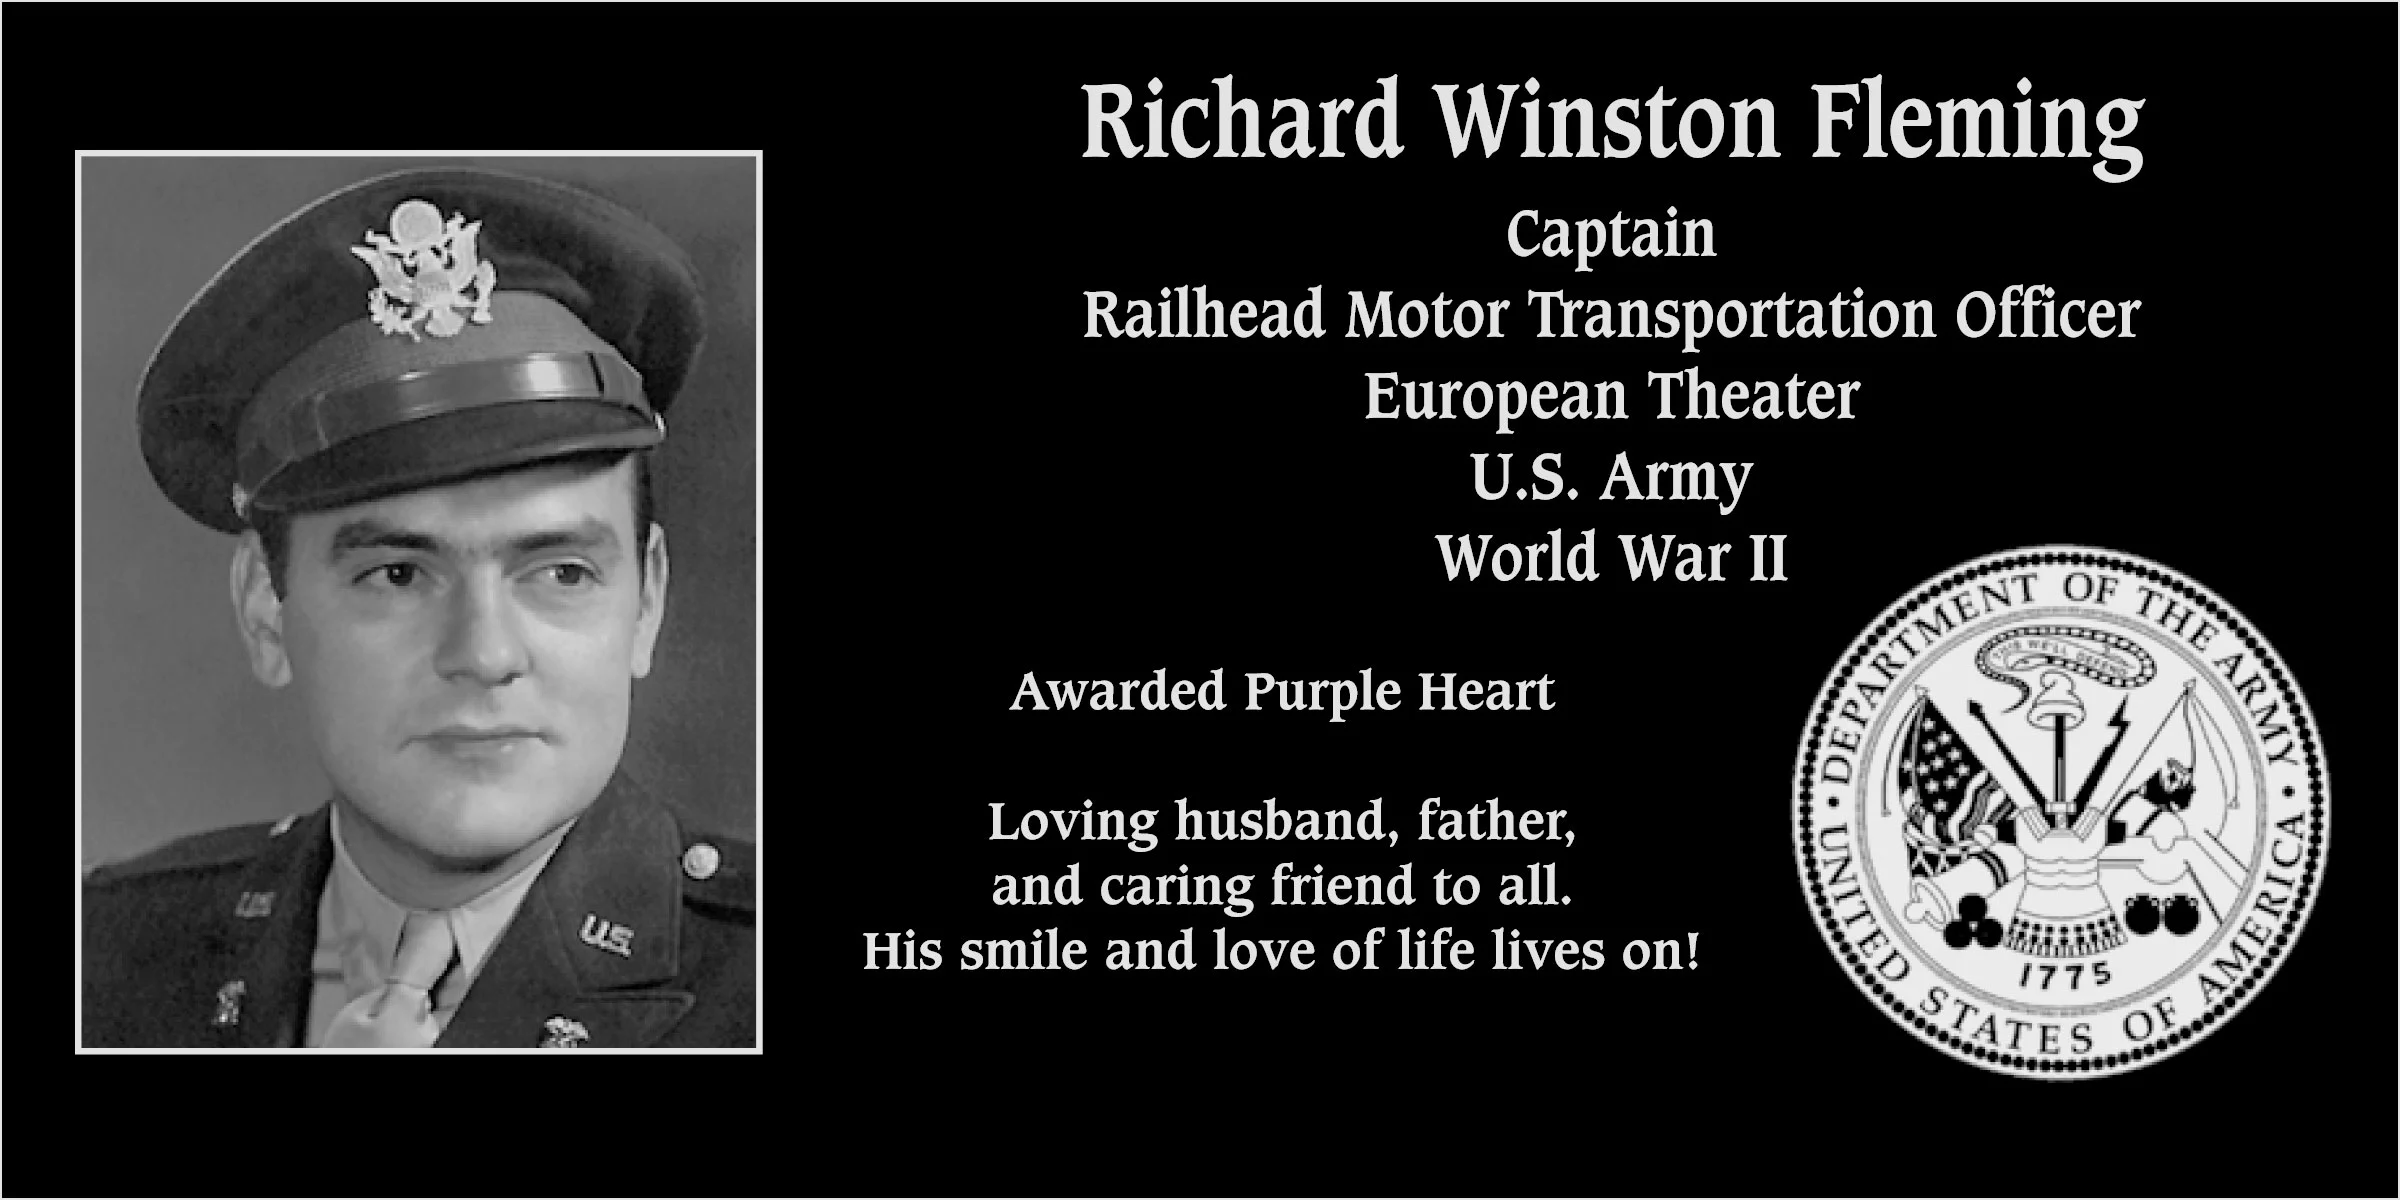 Richard Winston Fleming